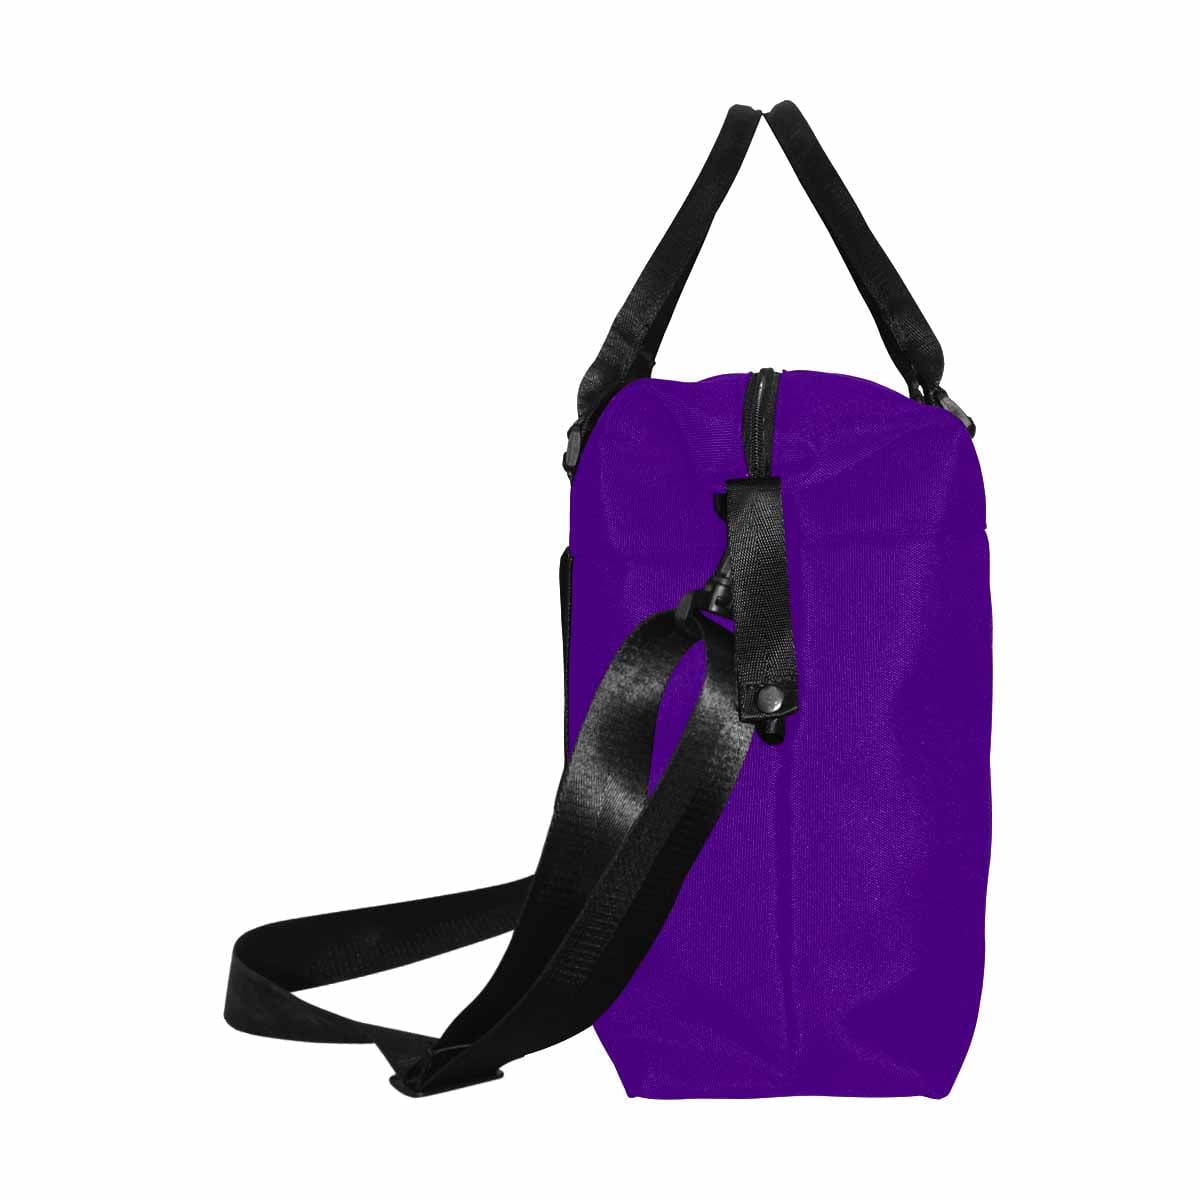 Indigo Purple Duffel Bag Large Travel Carry On - Bags | Duffel Bags